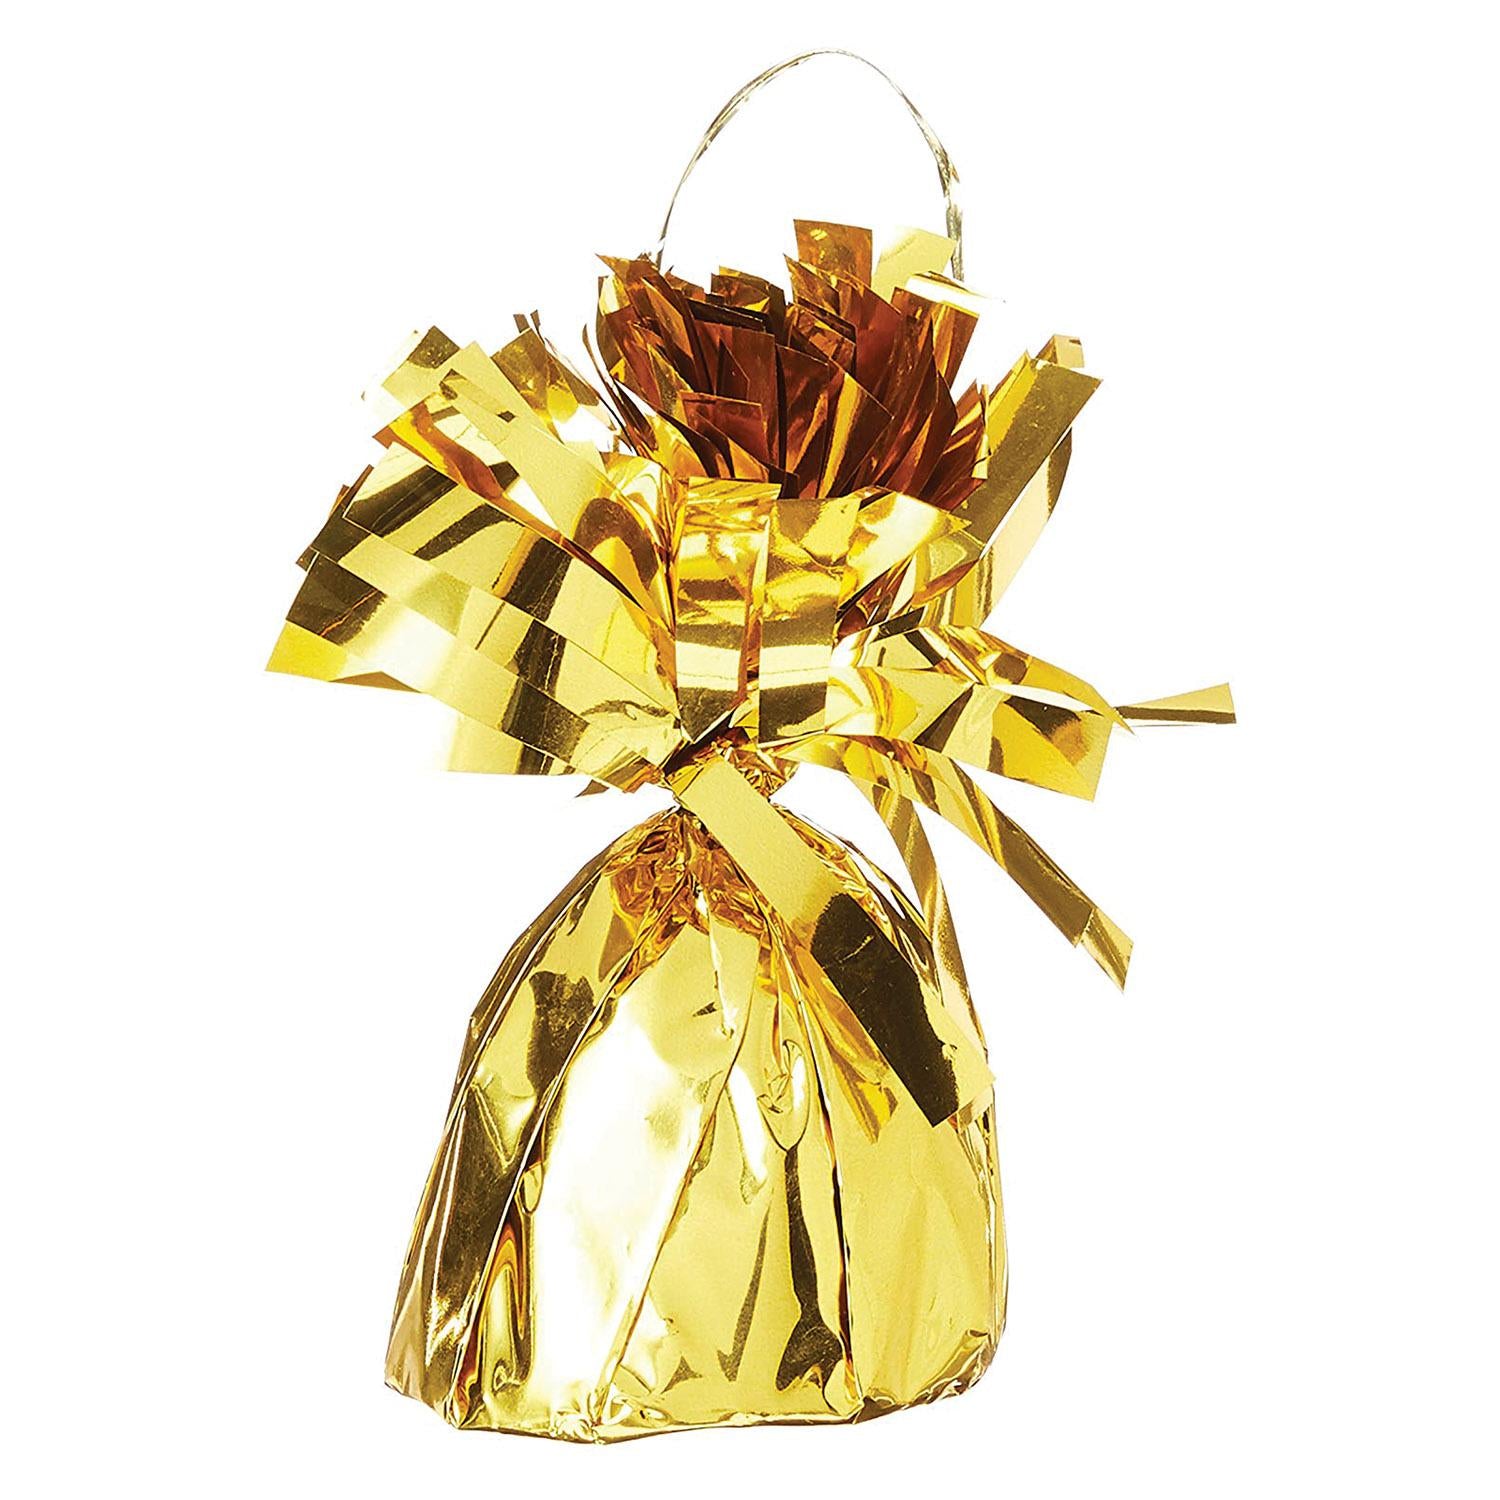 Beistle Metallic Wrapped Party Balloon Weight - gold